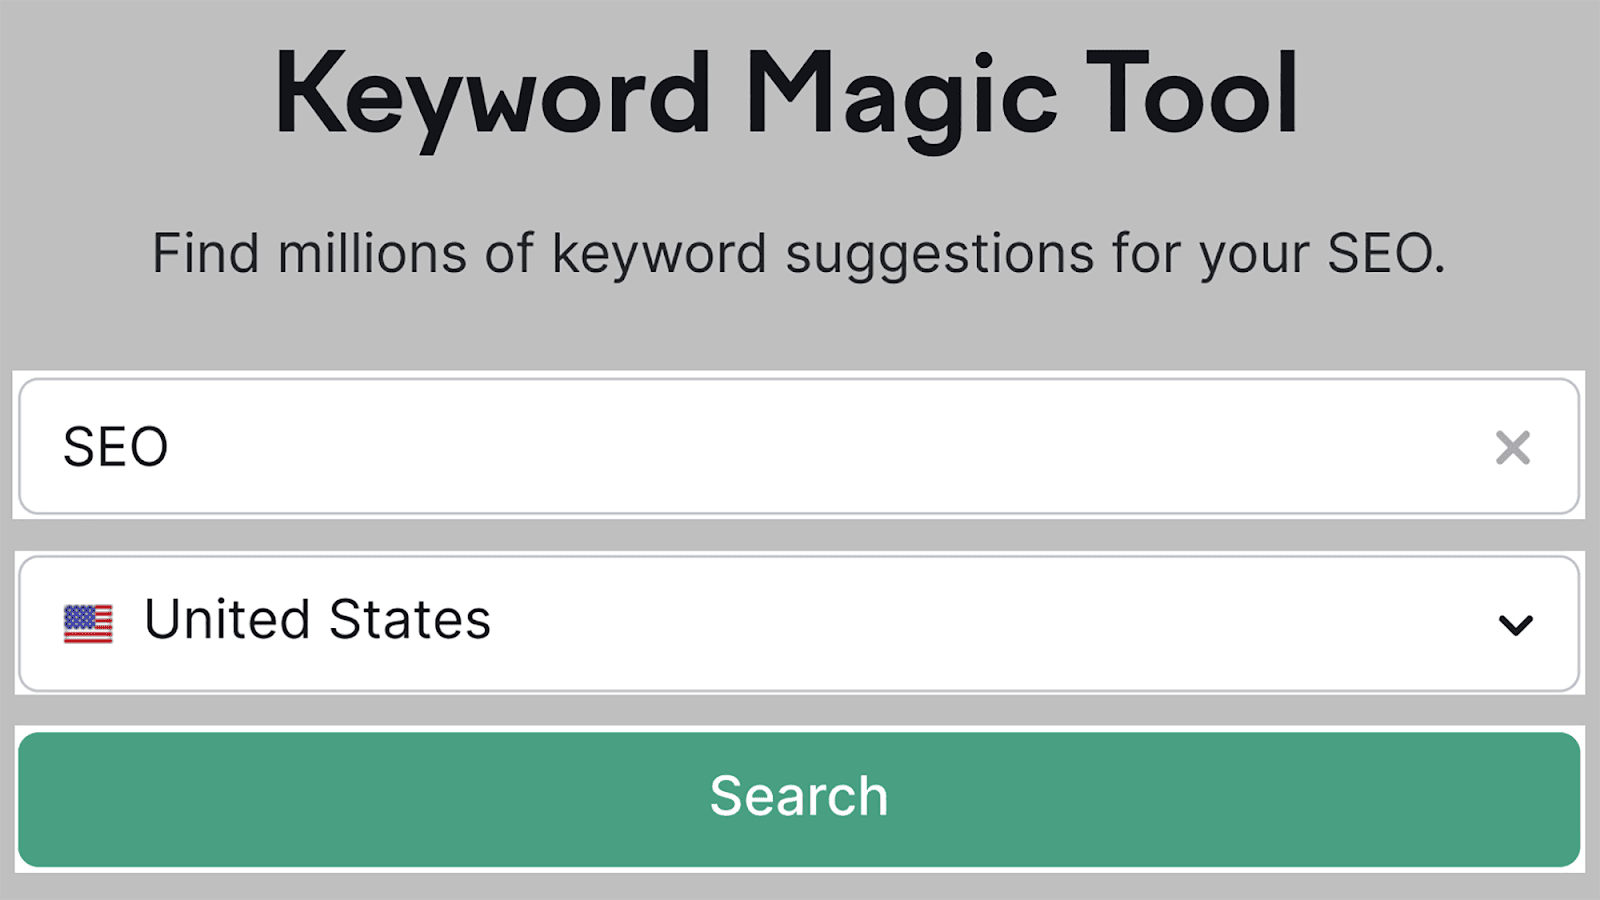 Add related keywords for bigger scope on Keyword Magic Tool